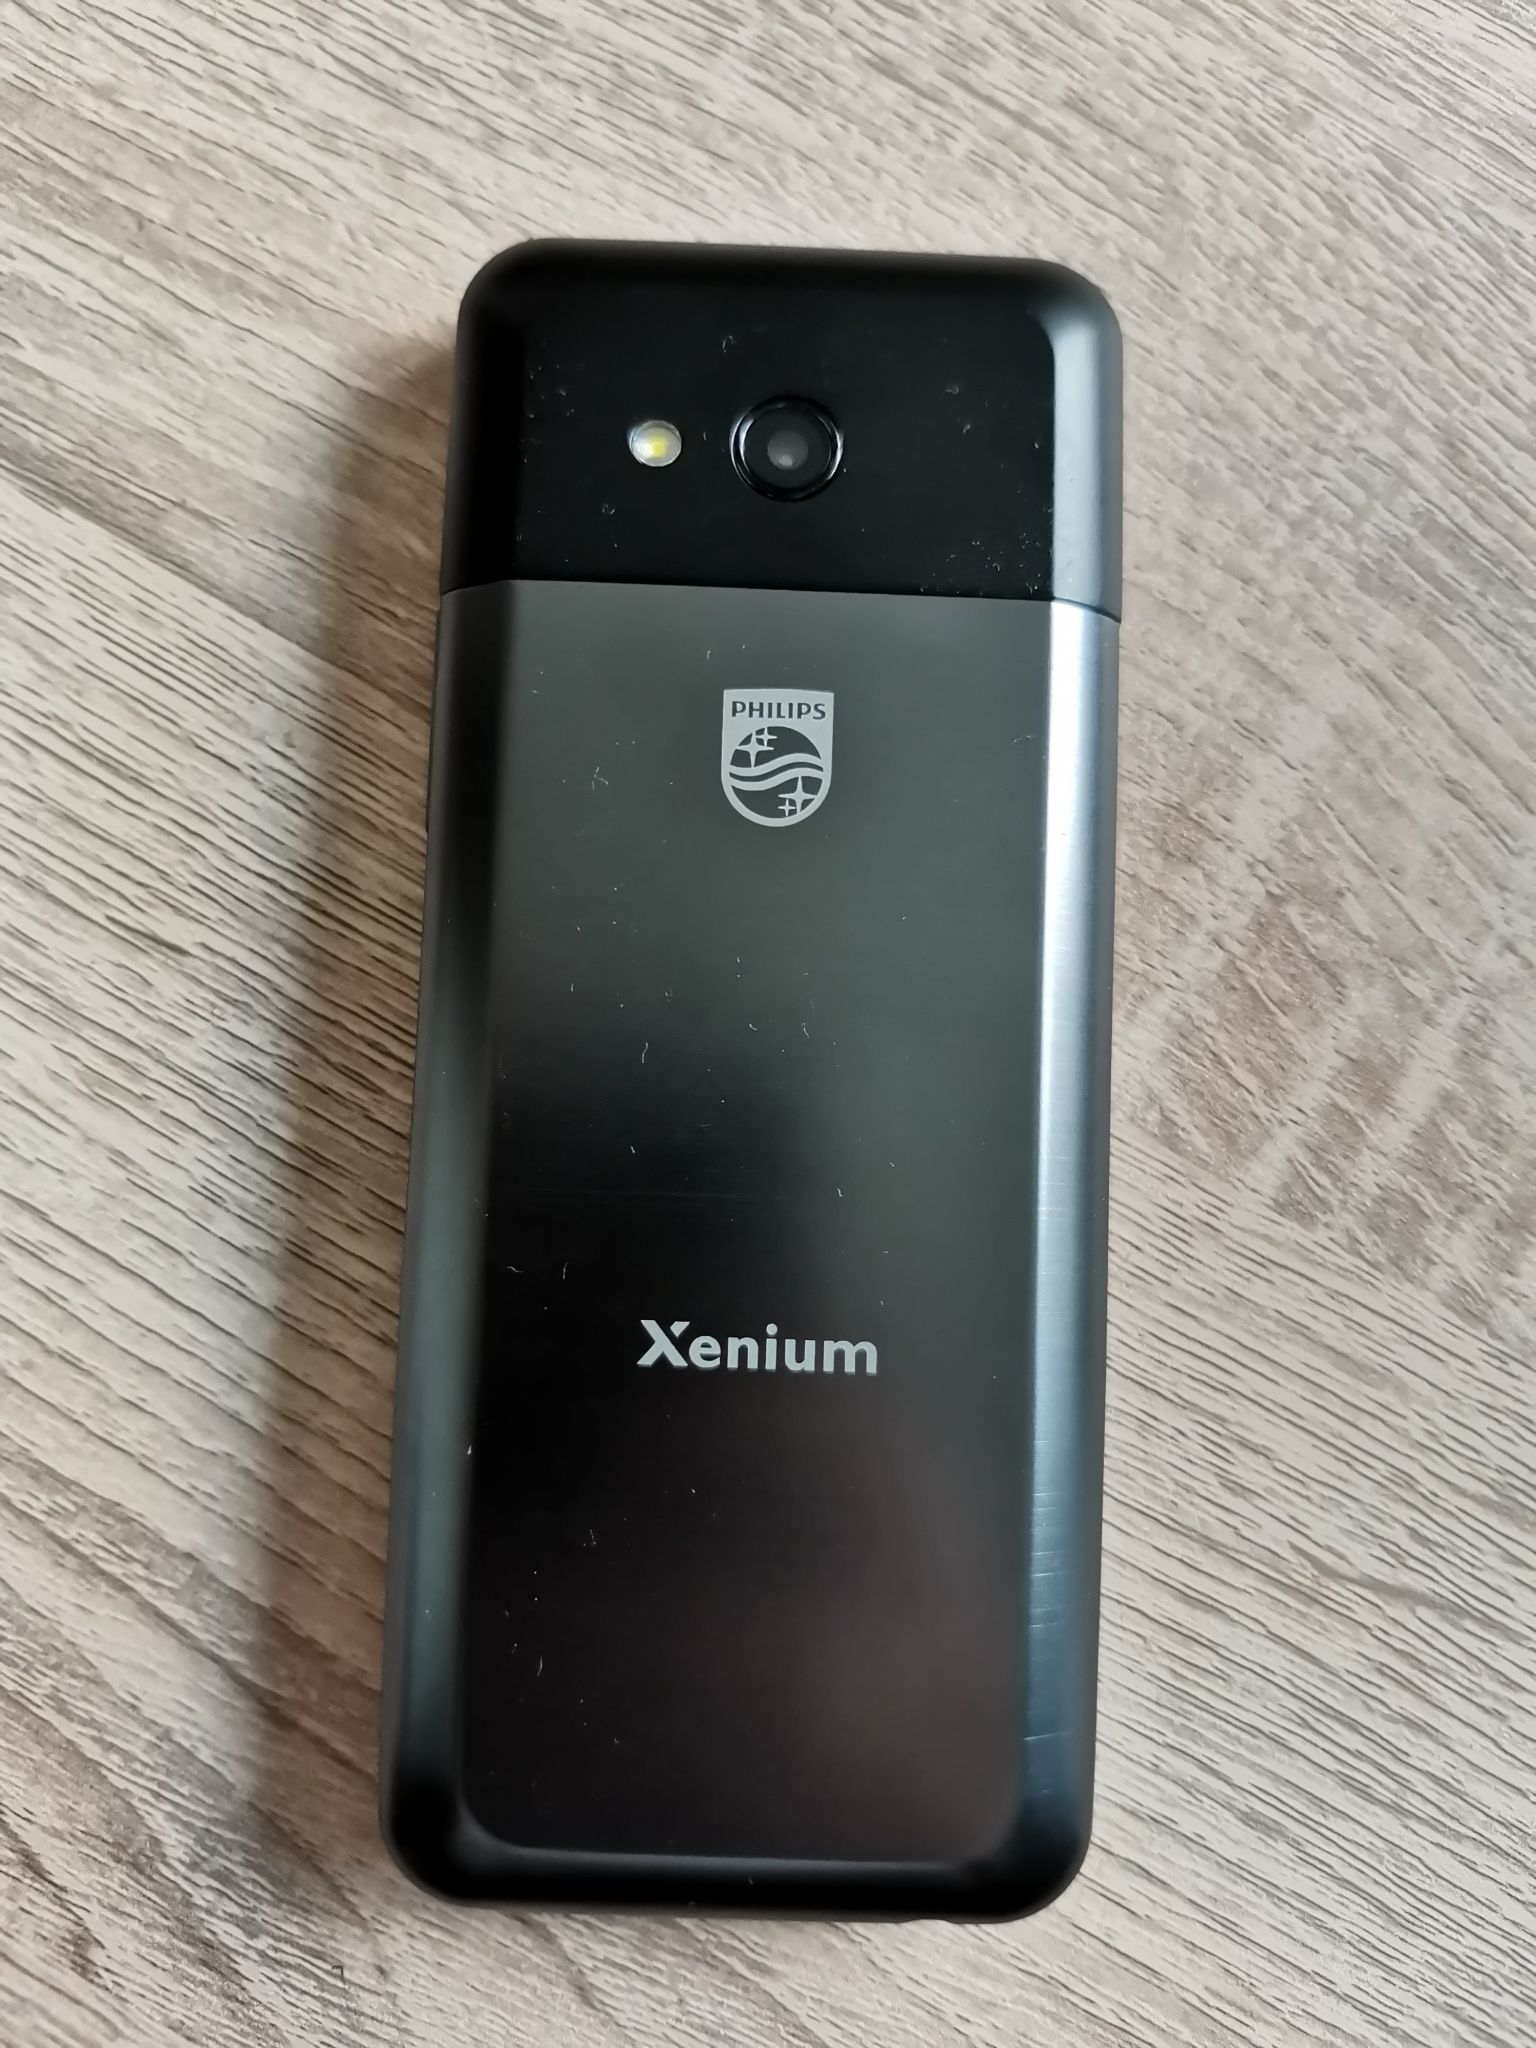 Xenium e590 black